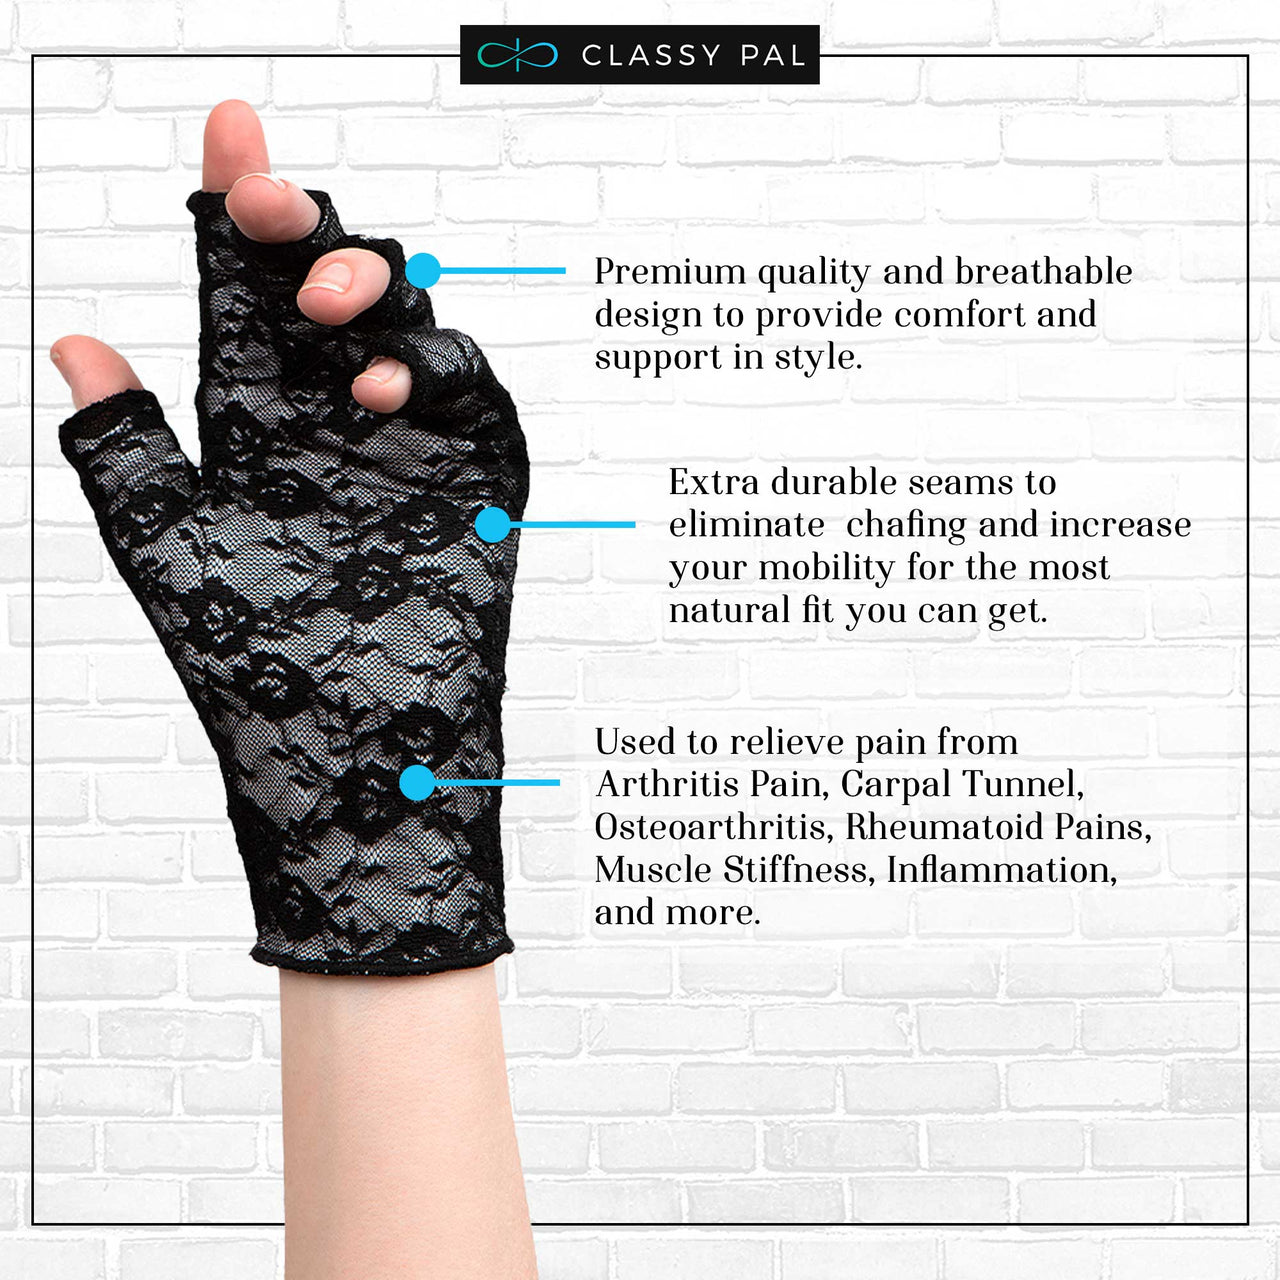 Lace Arthritis Compression Gloves - Classy Pal Arthritis Glove